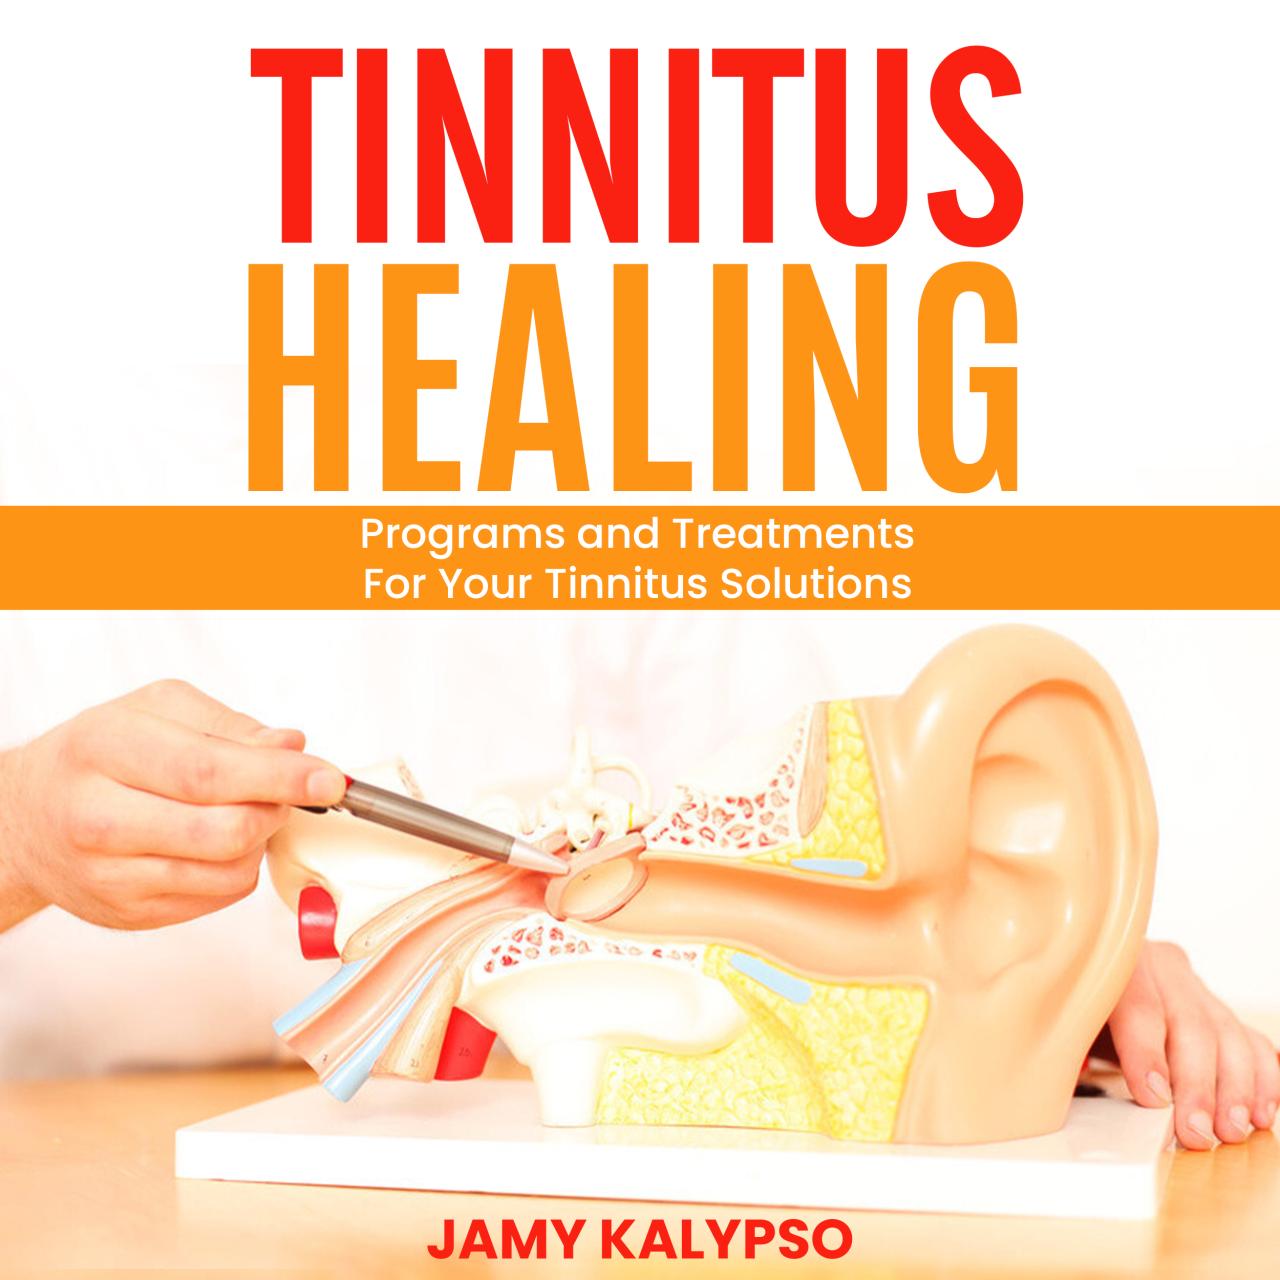 Tinnitus relief